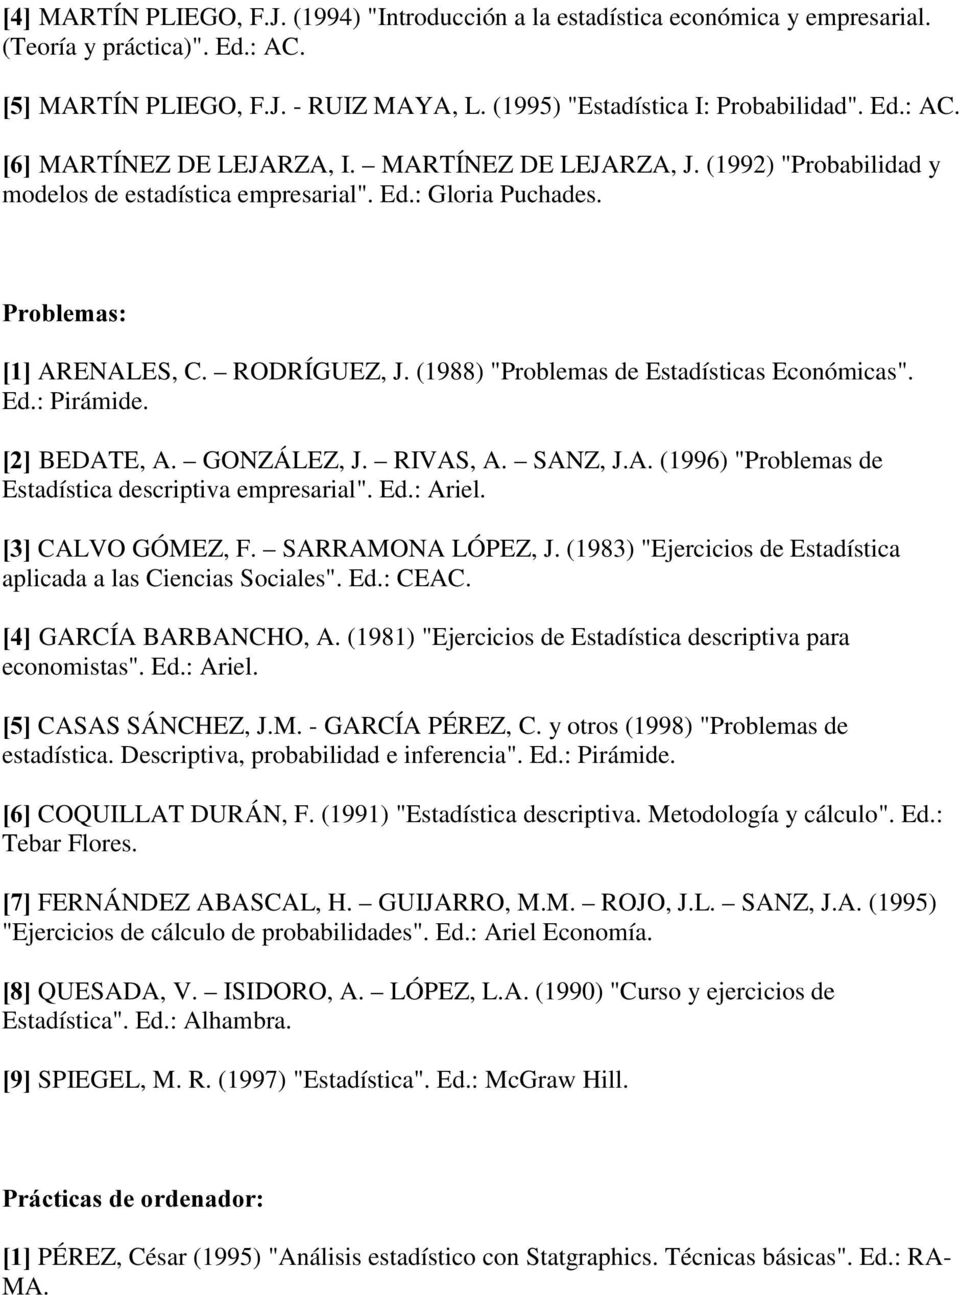 >@BEDATE, A. GONZÁLEZ, J. RIVAS, A. SANZ, J.A. (1996) "Problemas de Estadística descriptiva empresarial". Ed.: Ariel. >@CALVO GÓMEZ, F. SARRAMONA LÓPEZ, J.